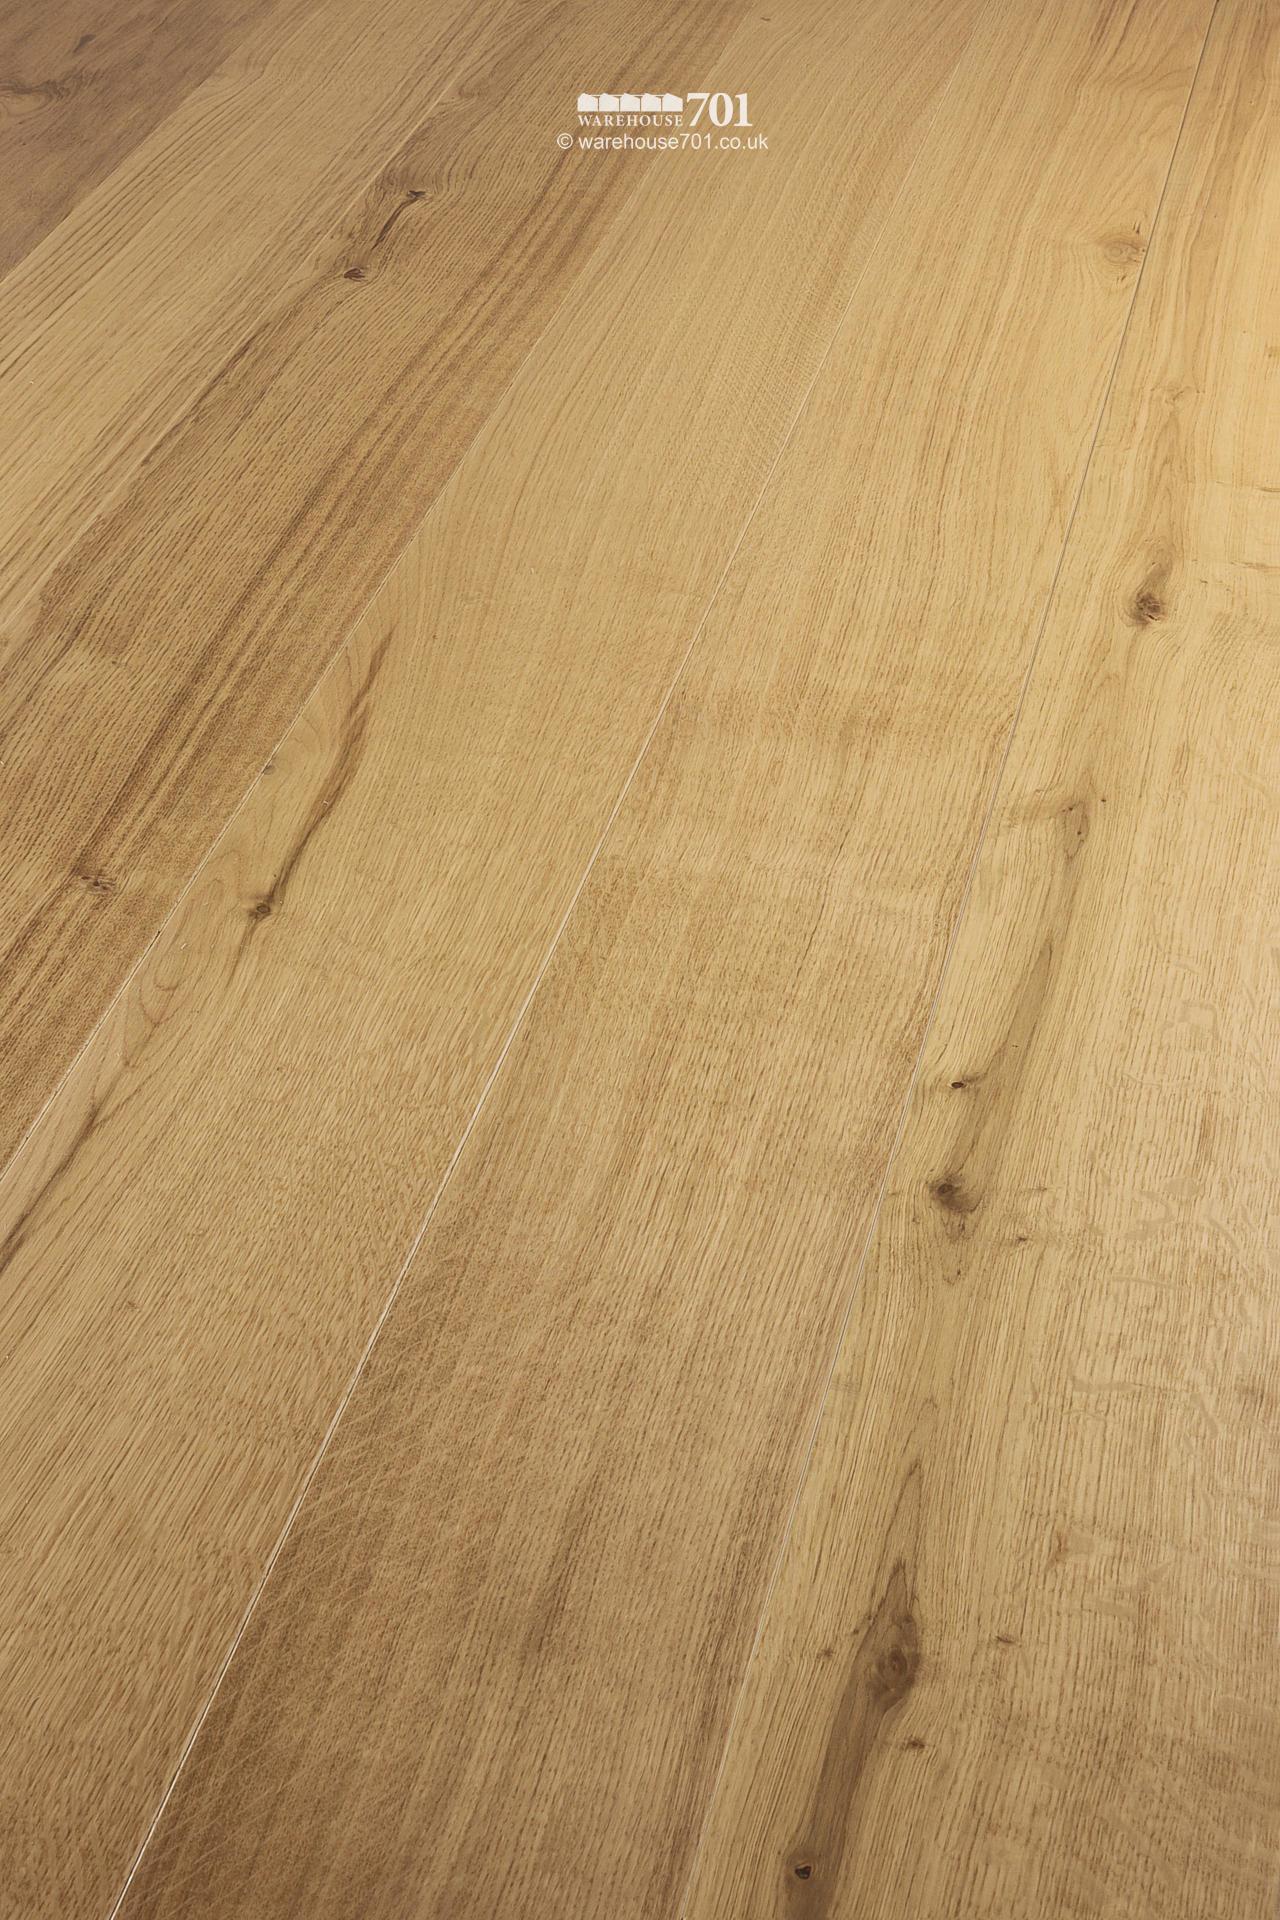 New 'Rustic' Engineered Natural Oak Wood Flooring #4